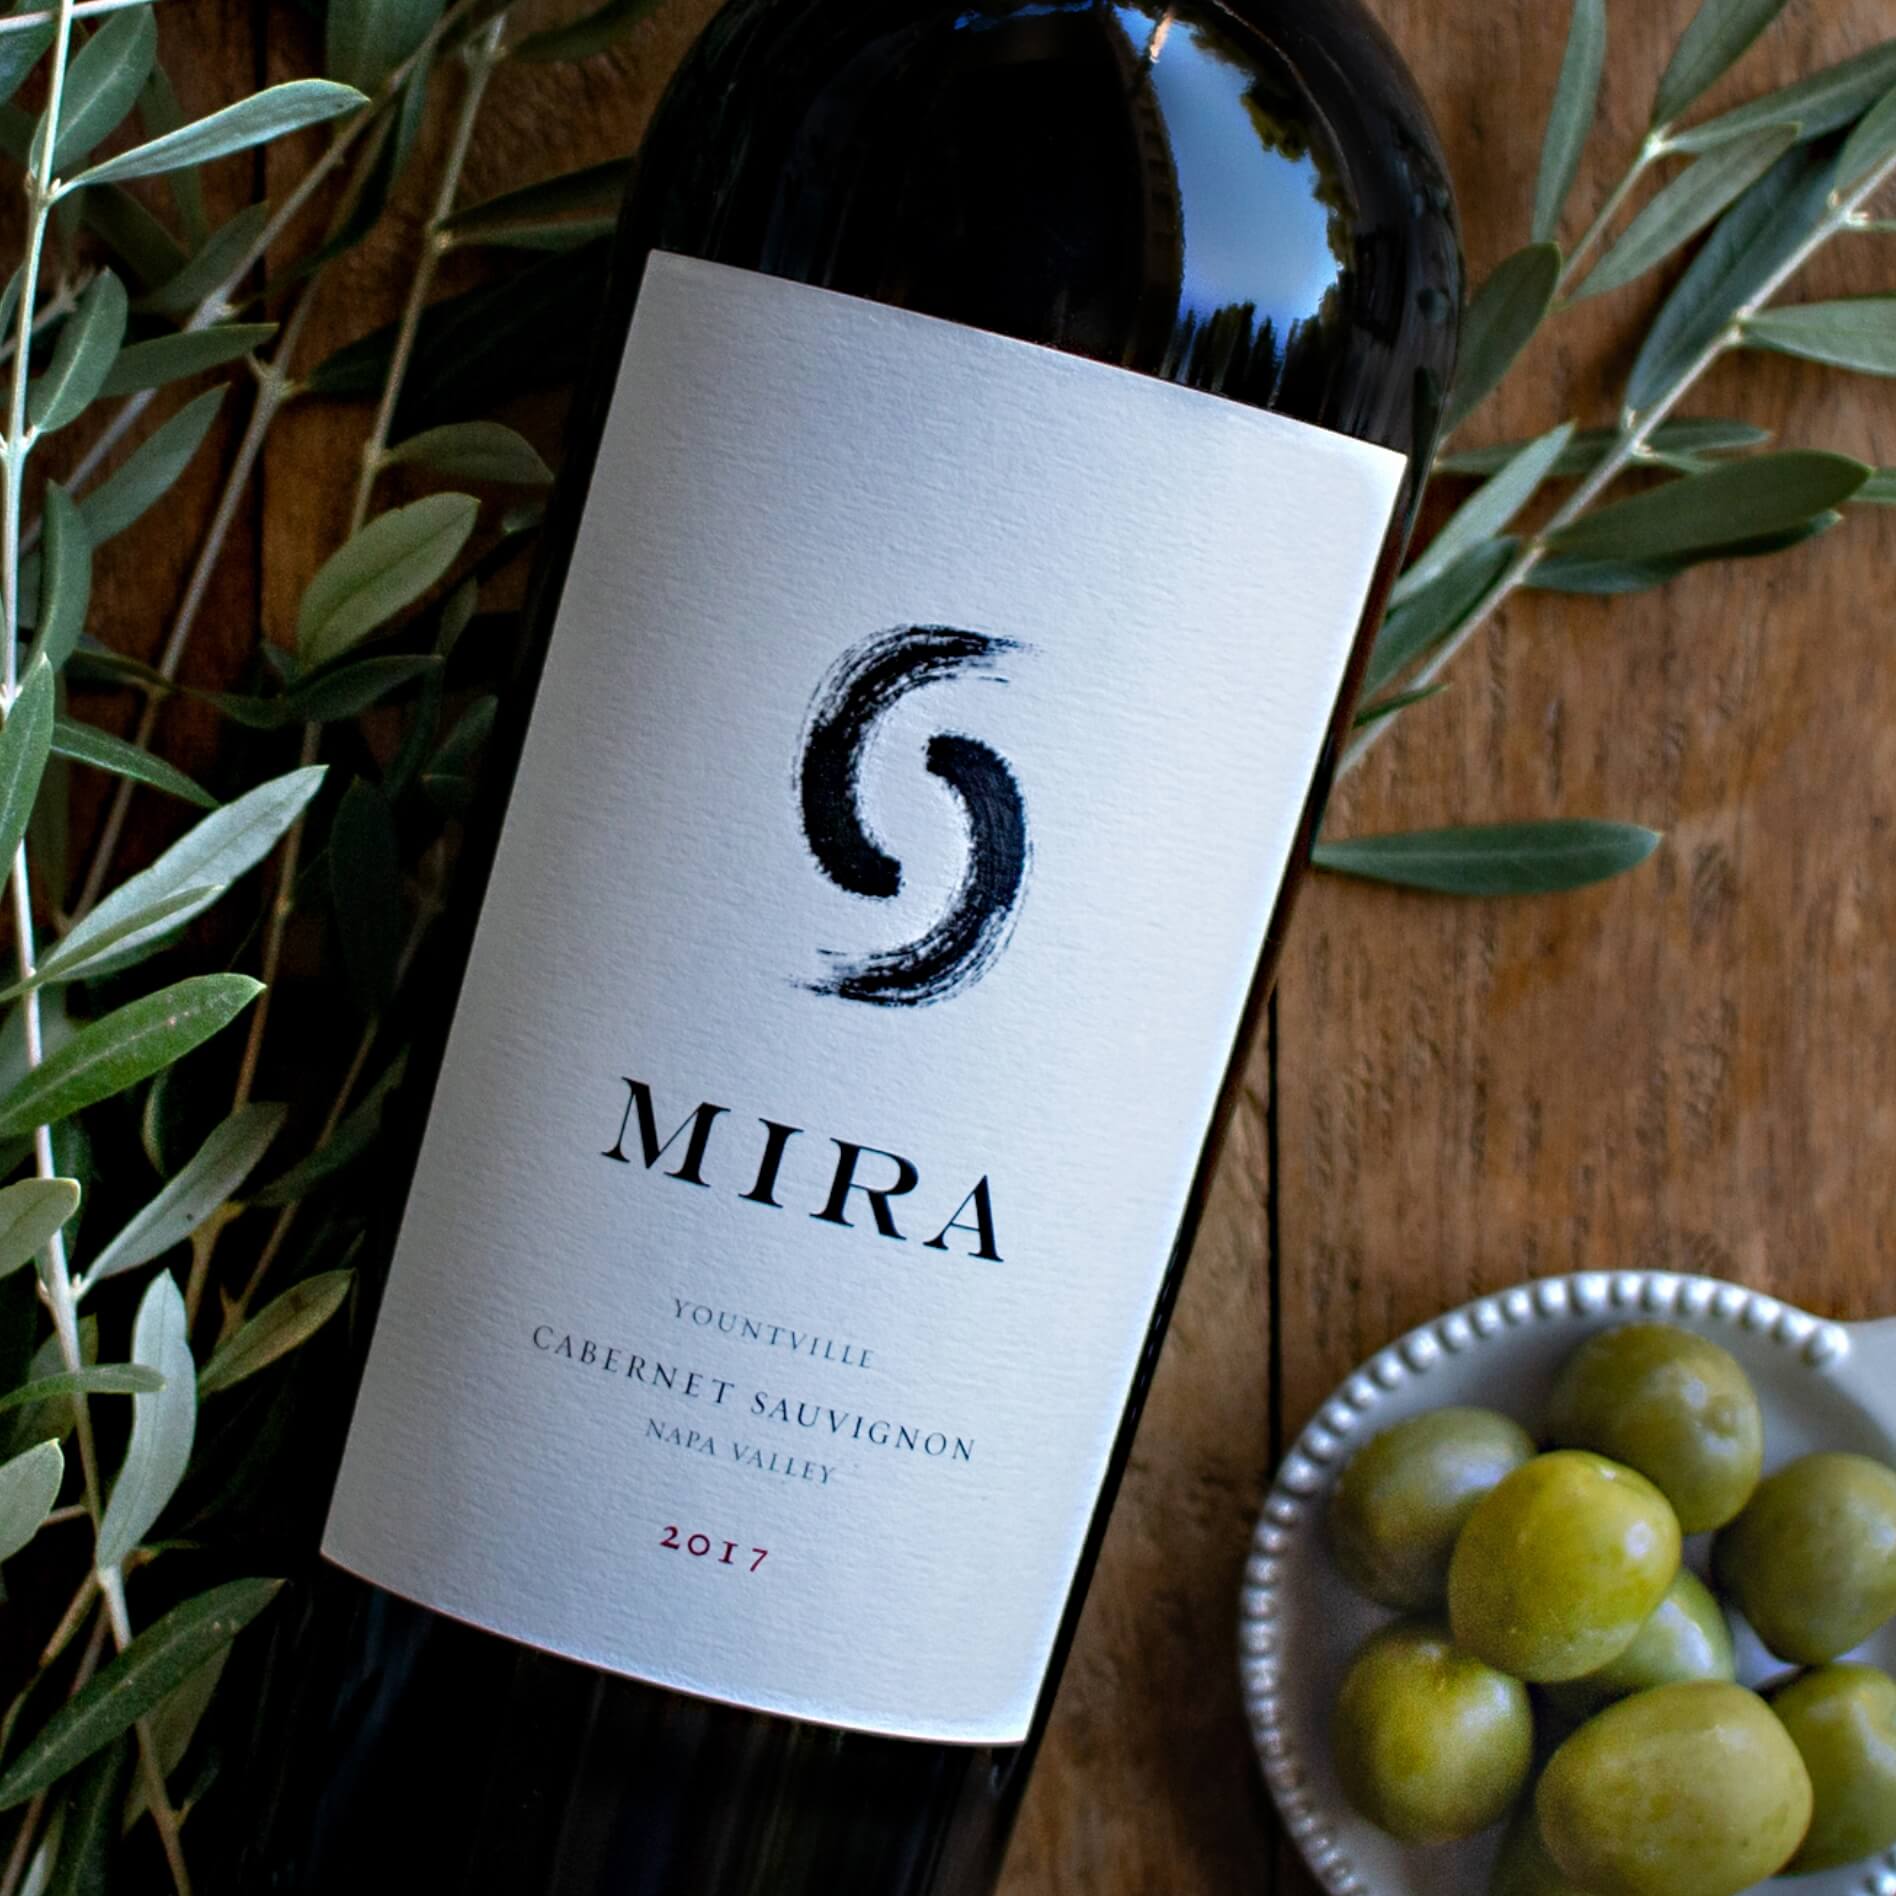 Bottle of Mira 2017 Cabernet Sauvignon